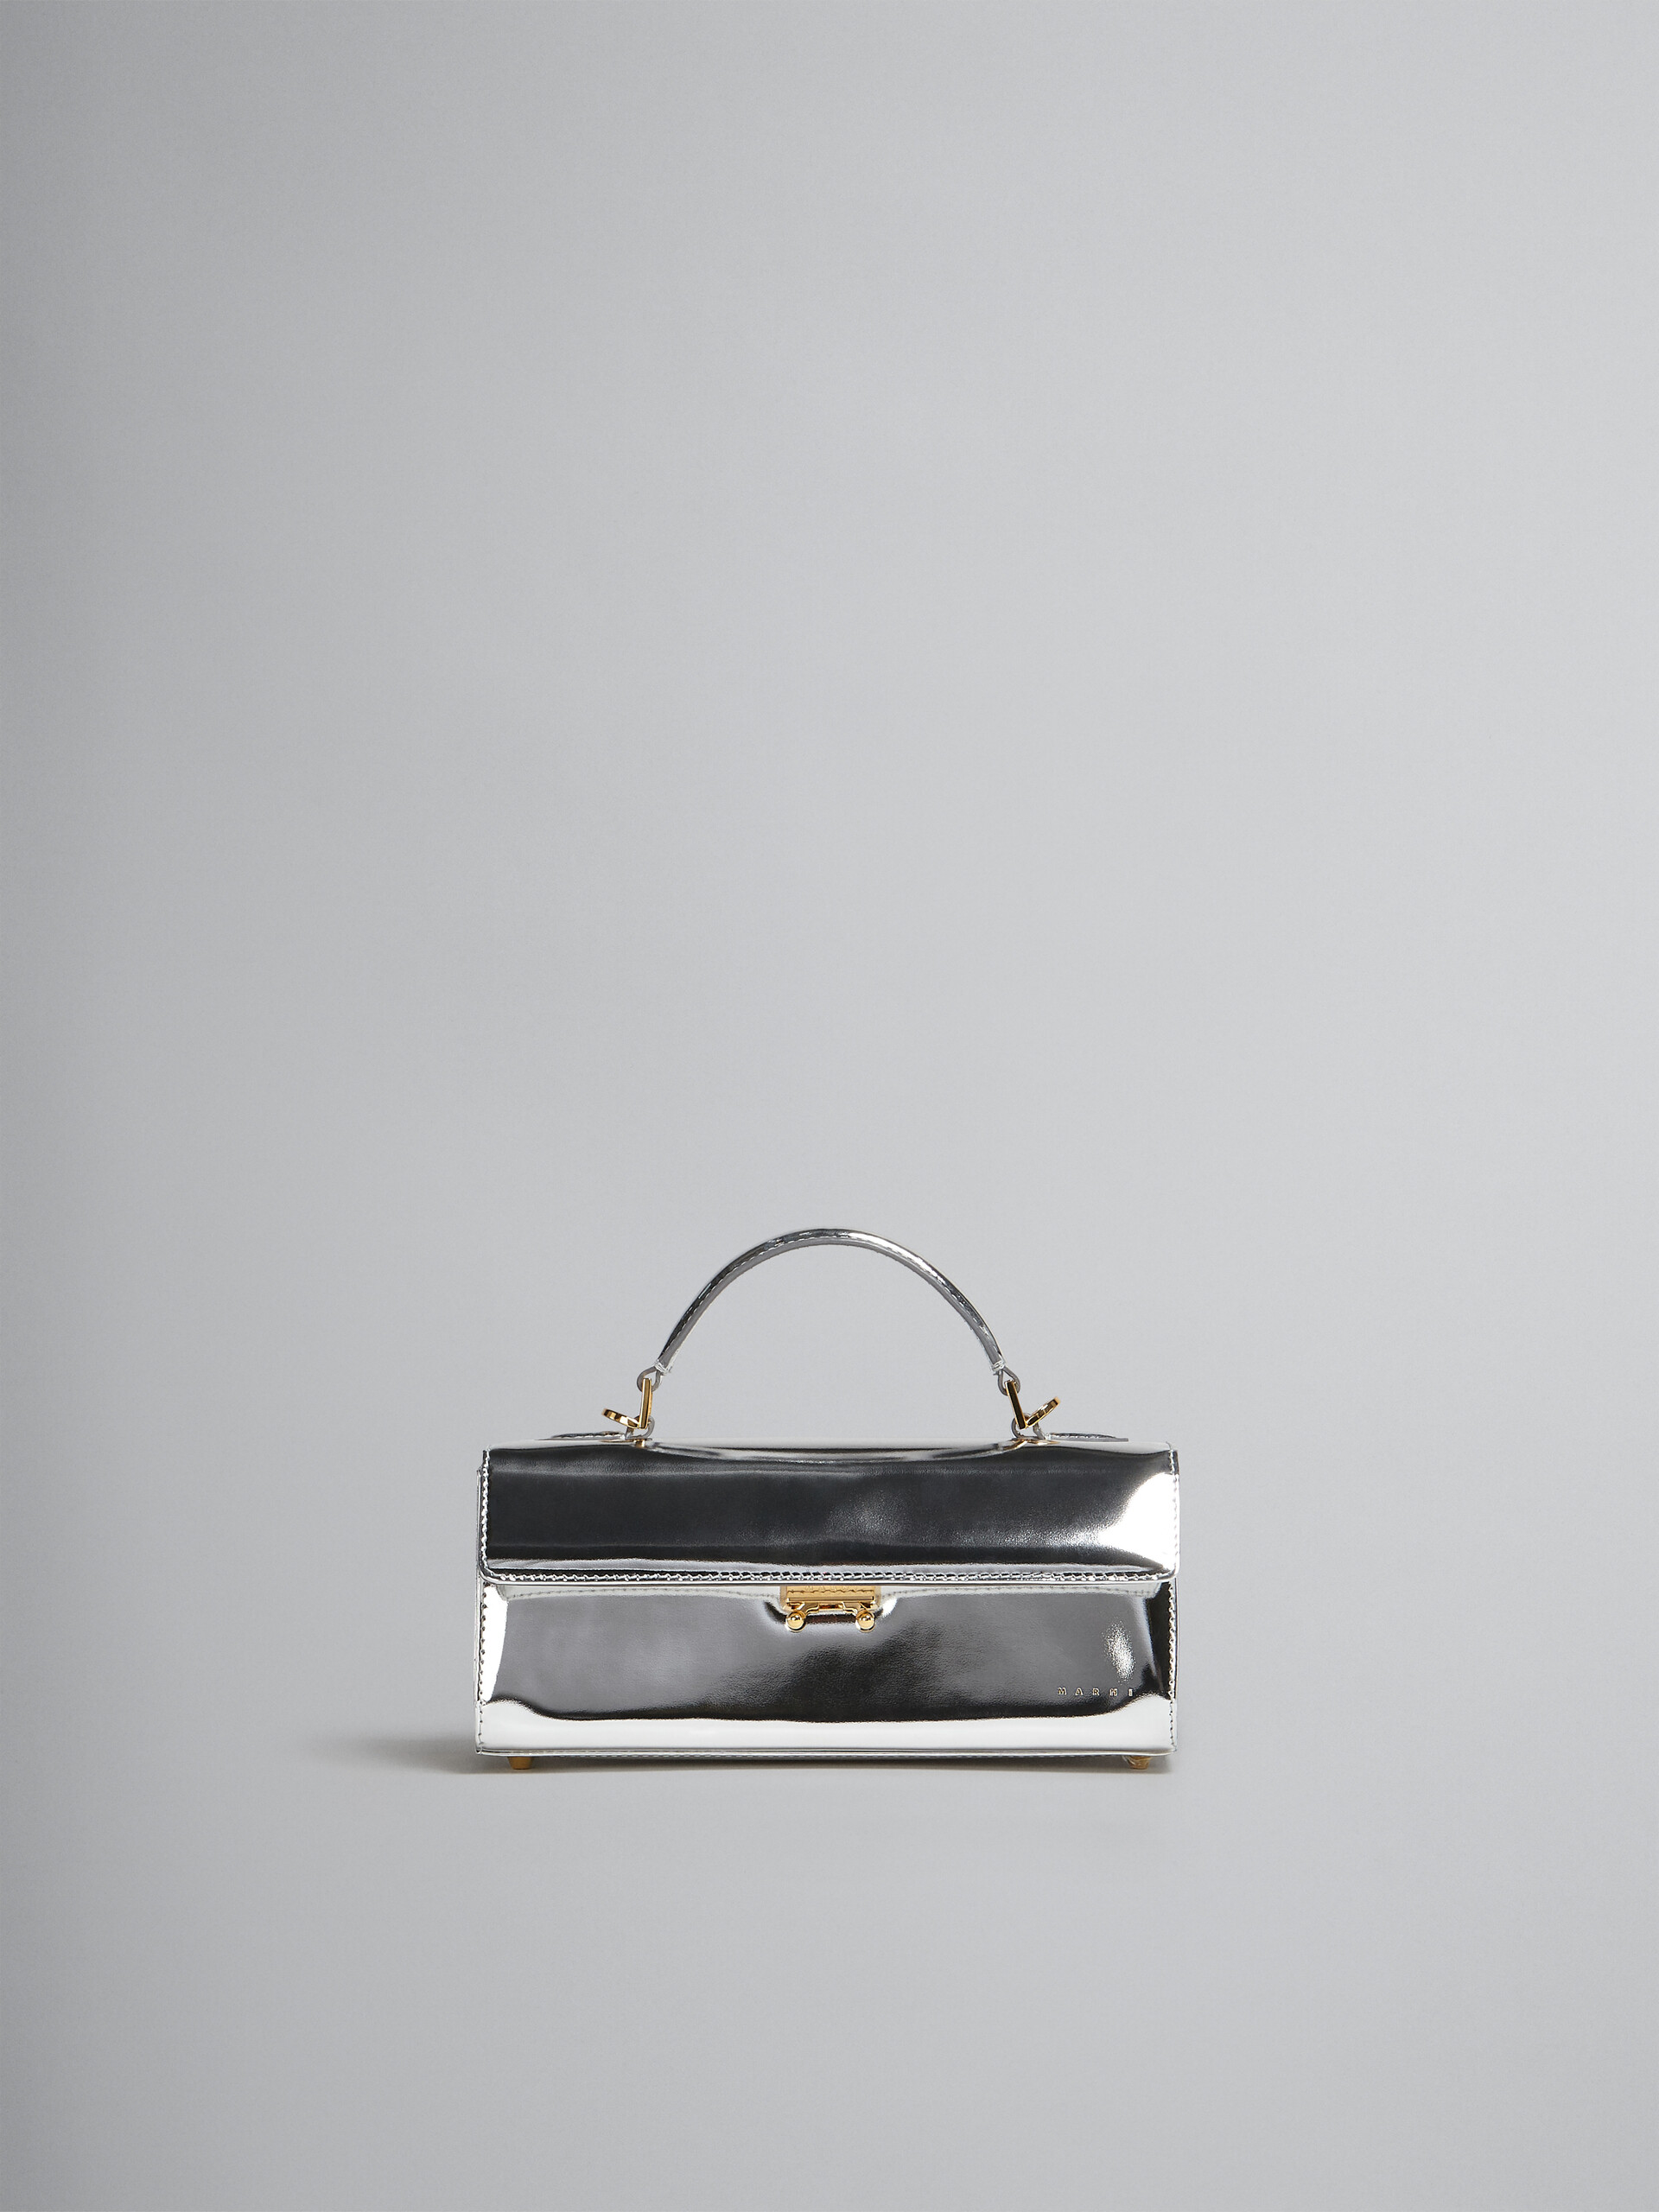 Relativity Medium Bag in silver-tone leather - Handbag - Image 1